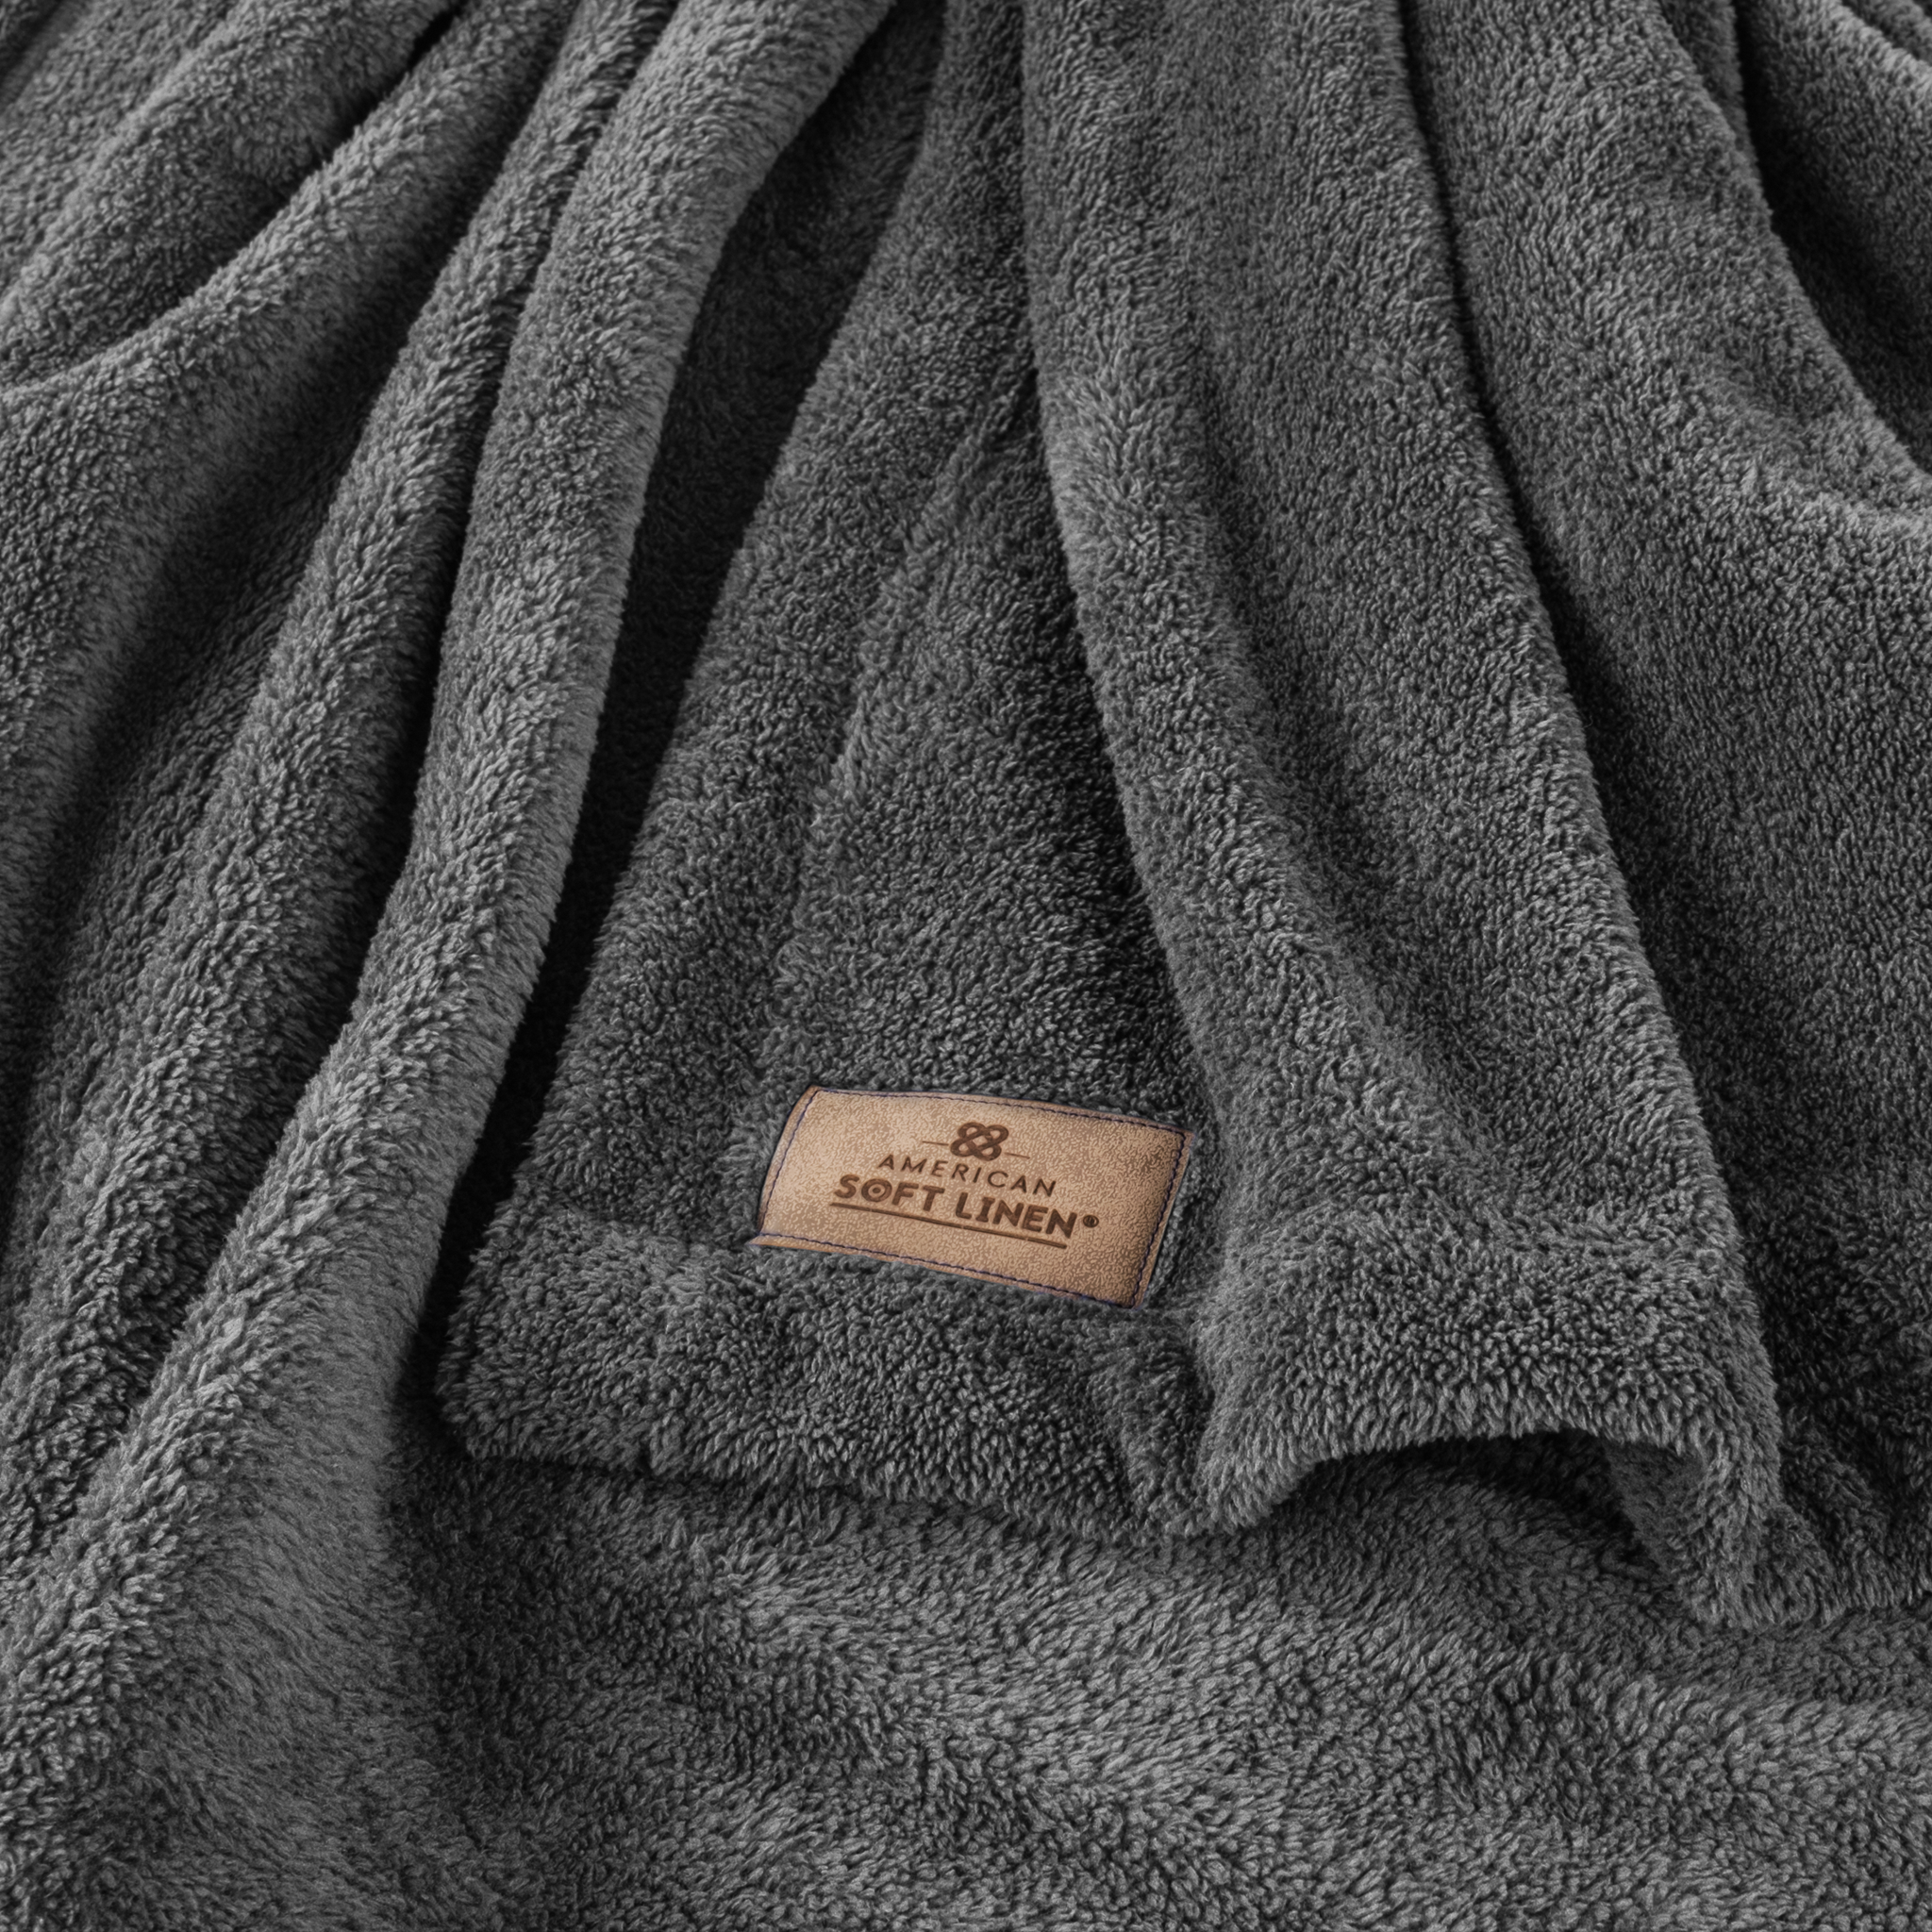 American Soft Linen - Bedding Fleece Blanket - Throw Size 50x60 inches - Gray - 4